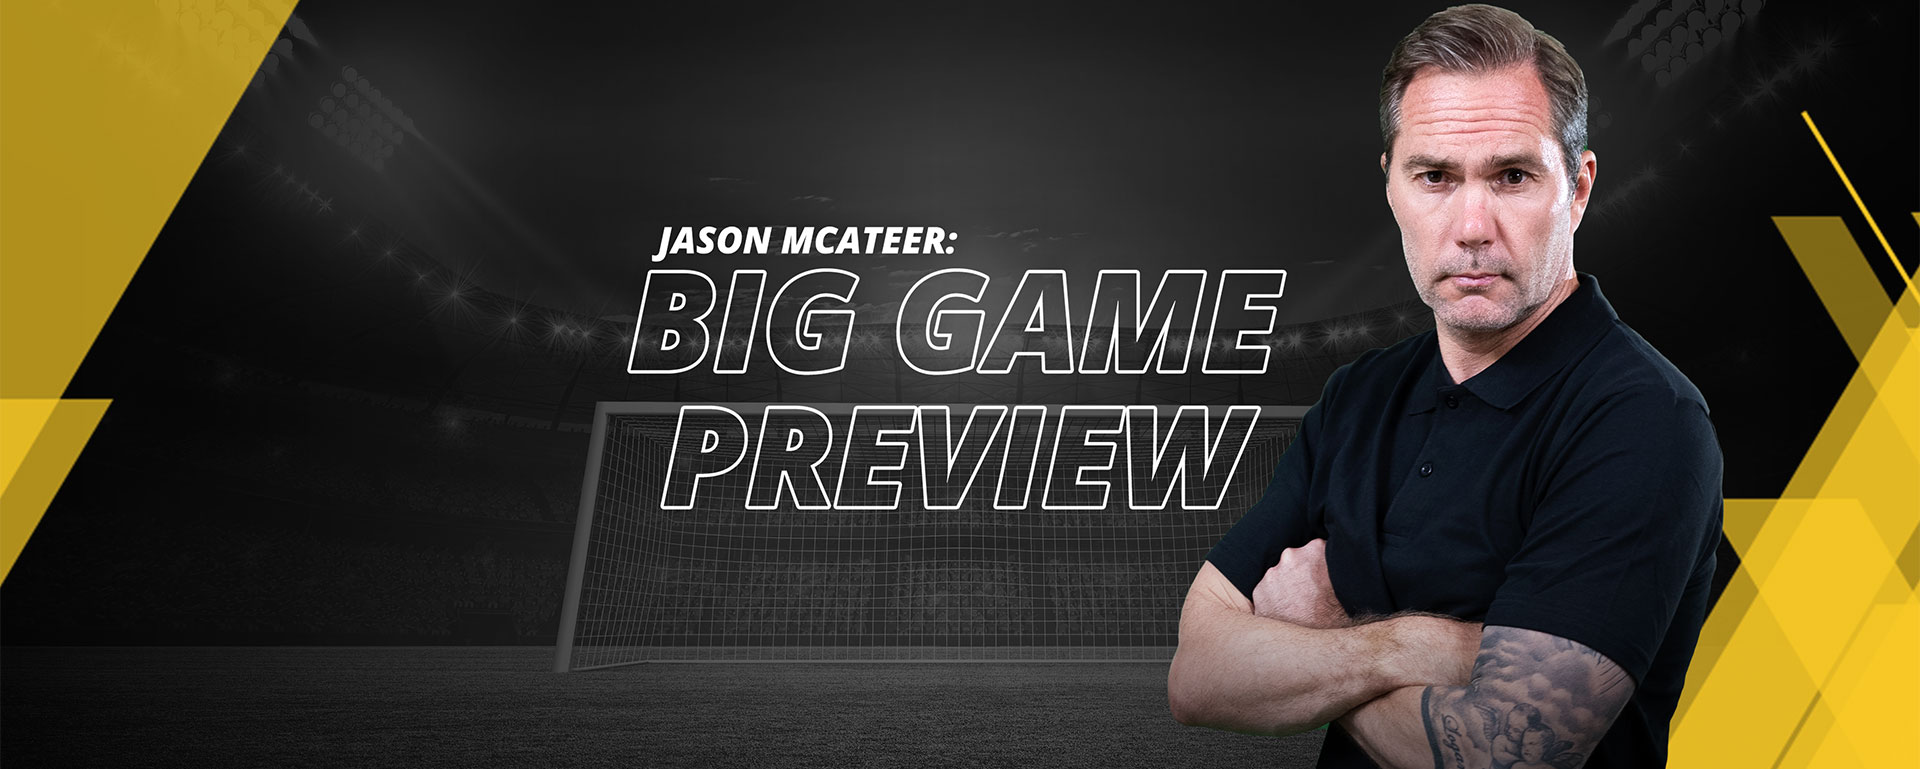 JASON MCATEER – BIG GAME PREVIEW